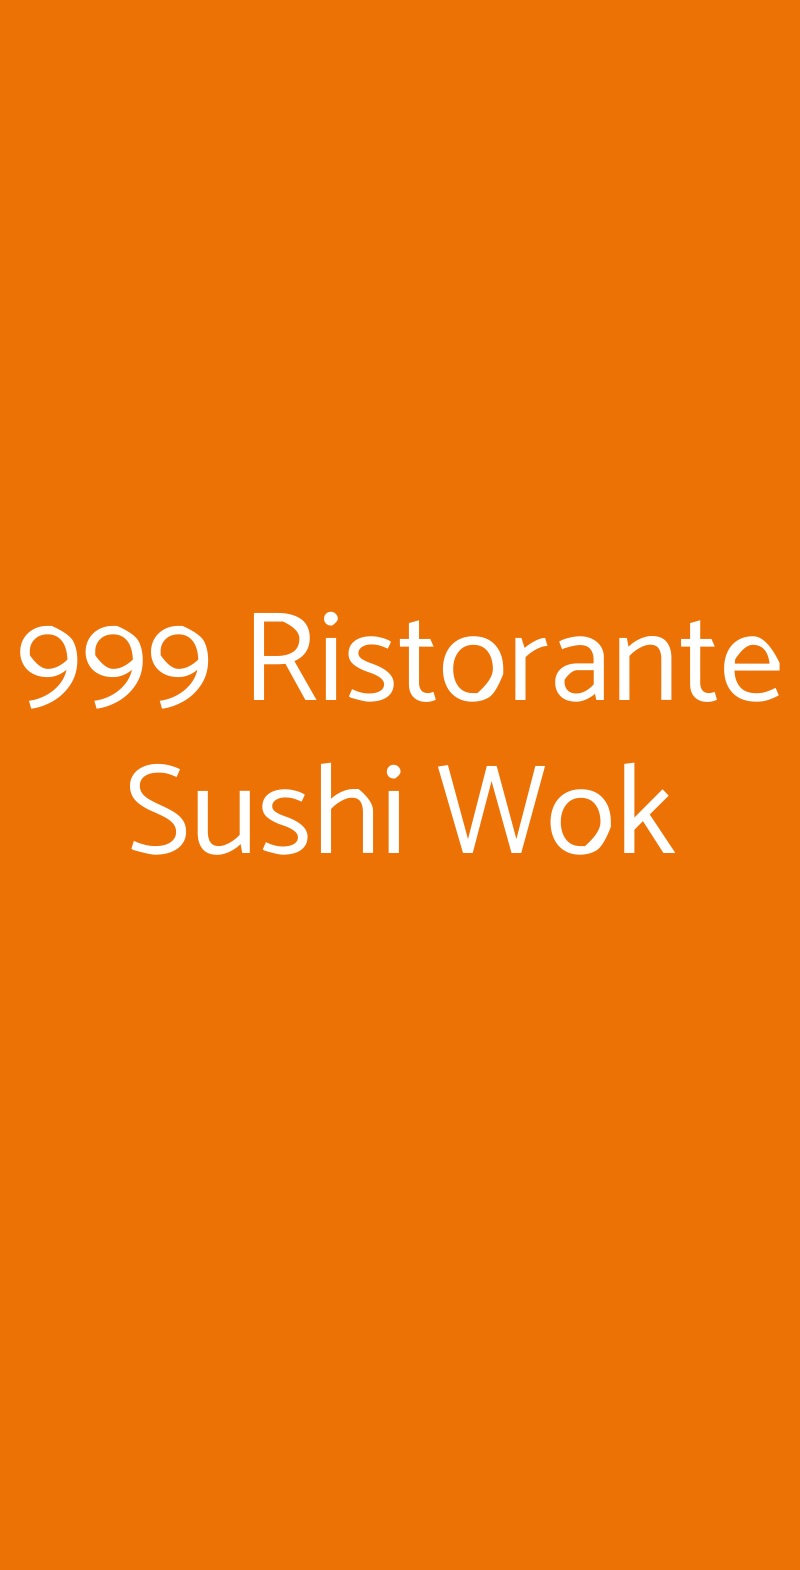 999 Ristorante Sushi Wok Milano menù 1 pagina